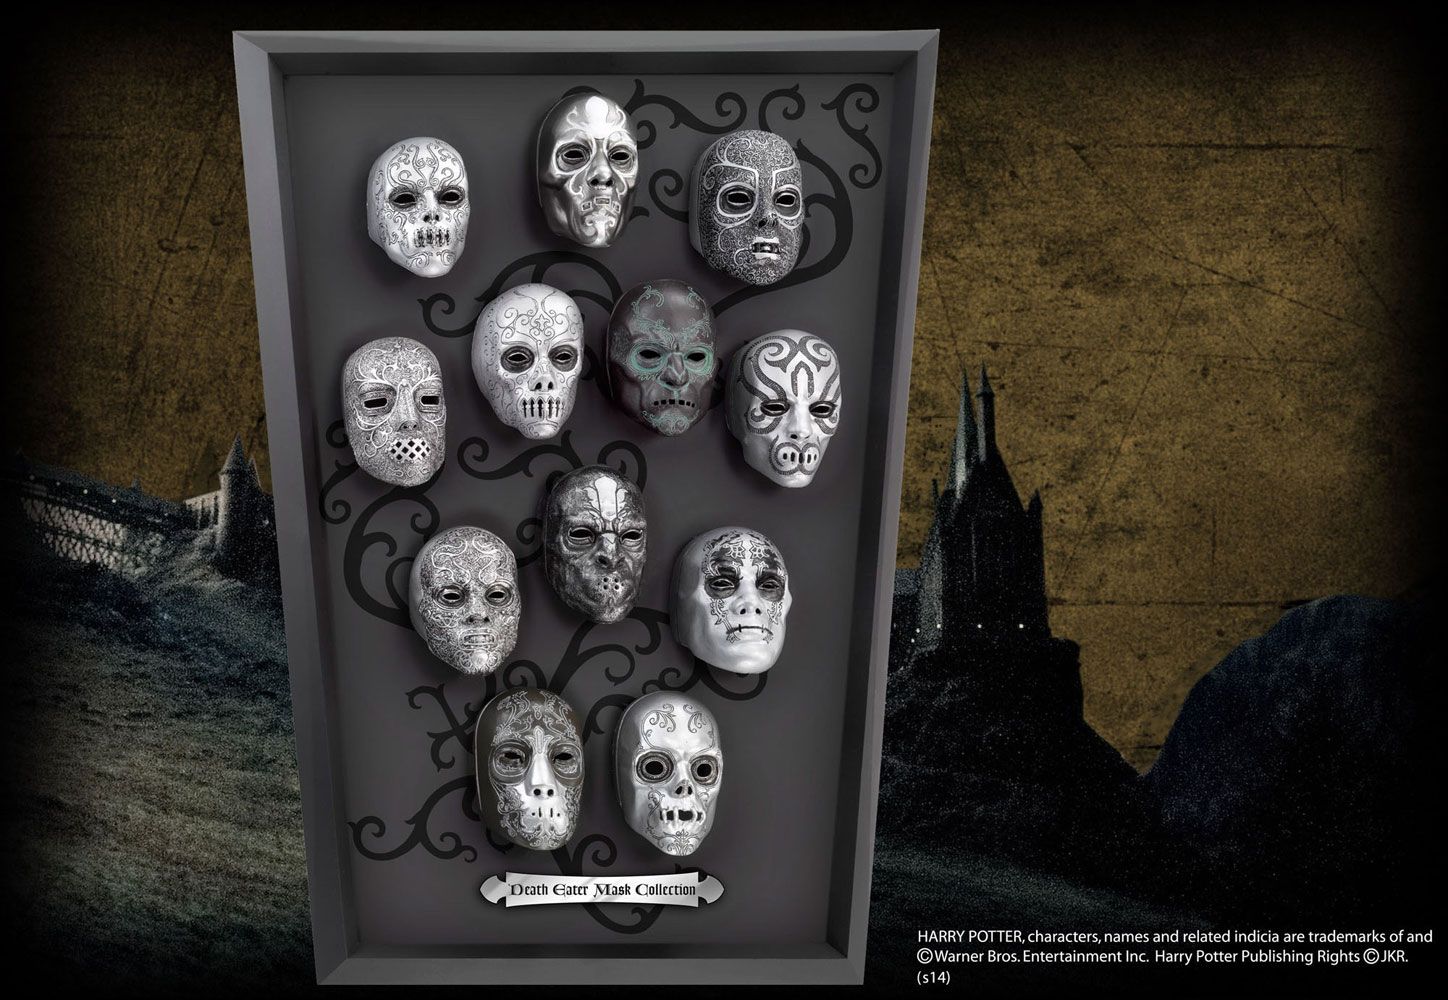 Collección Máscaras Death Eater Harry Potter - Collector4u.com